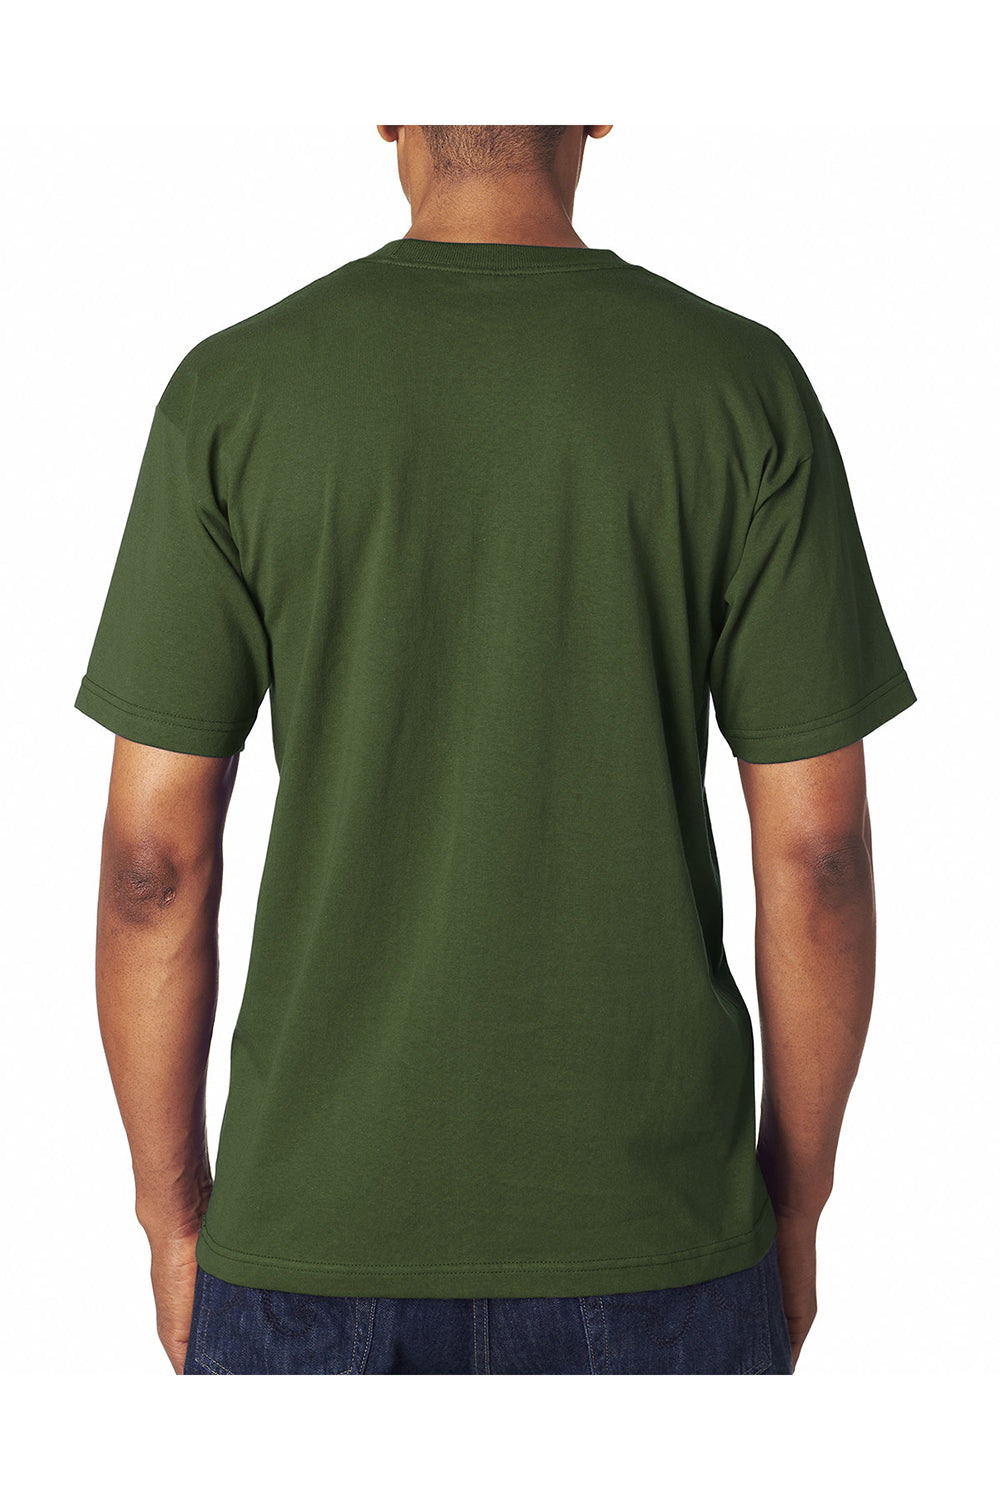 Bayside BA5100 Mens USA Made Short Sleeve Crewneck T-Shirt Forest Green Model Back